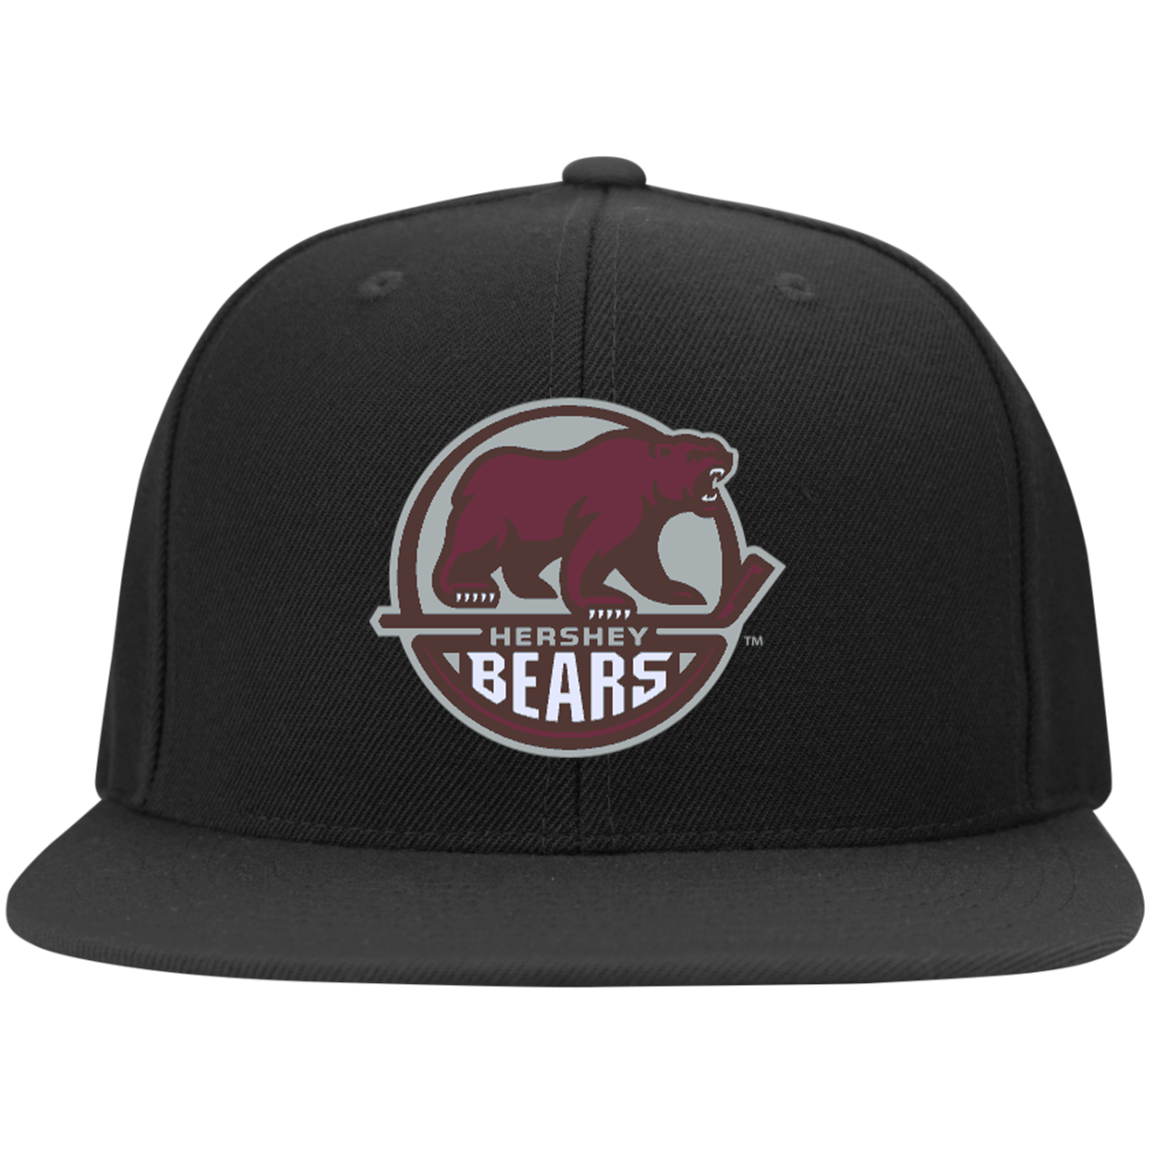 hershey bears hat